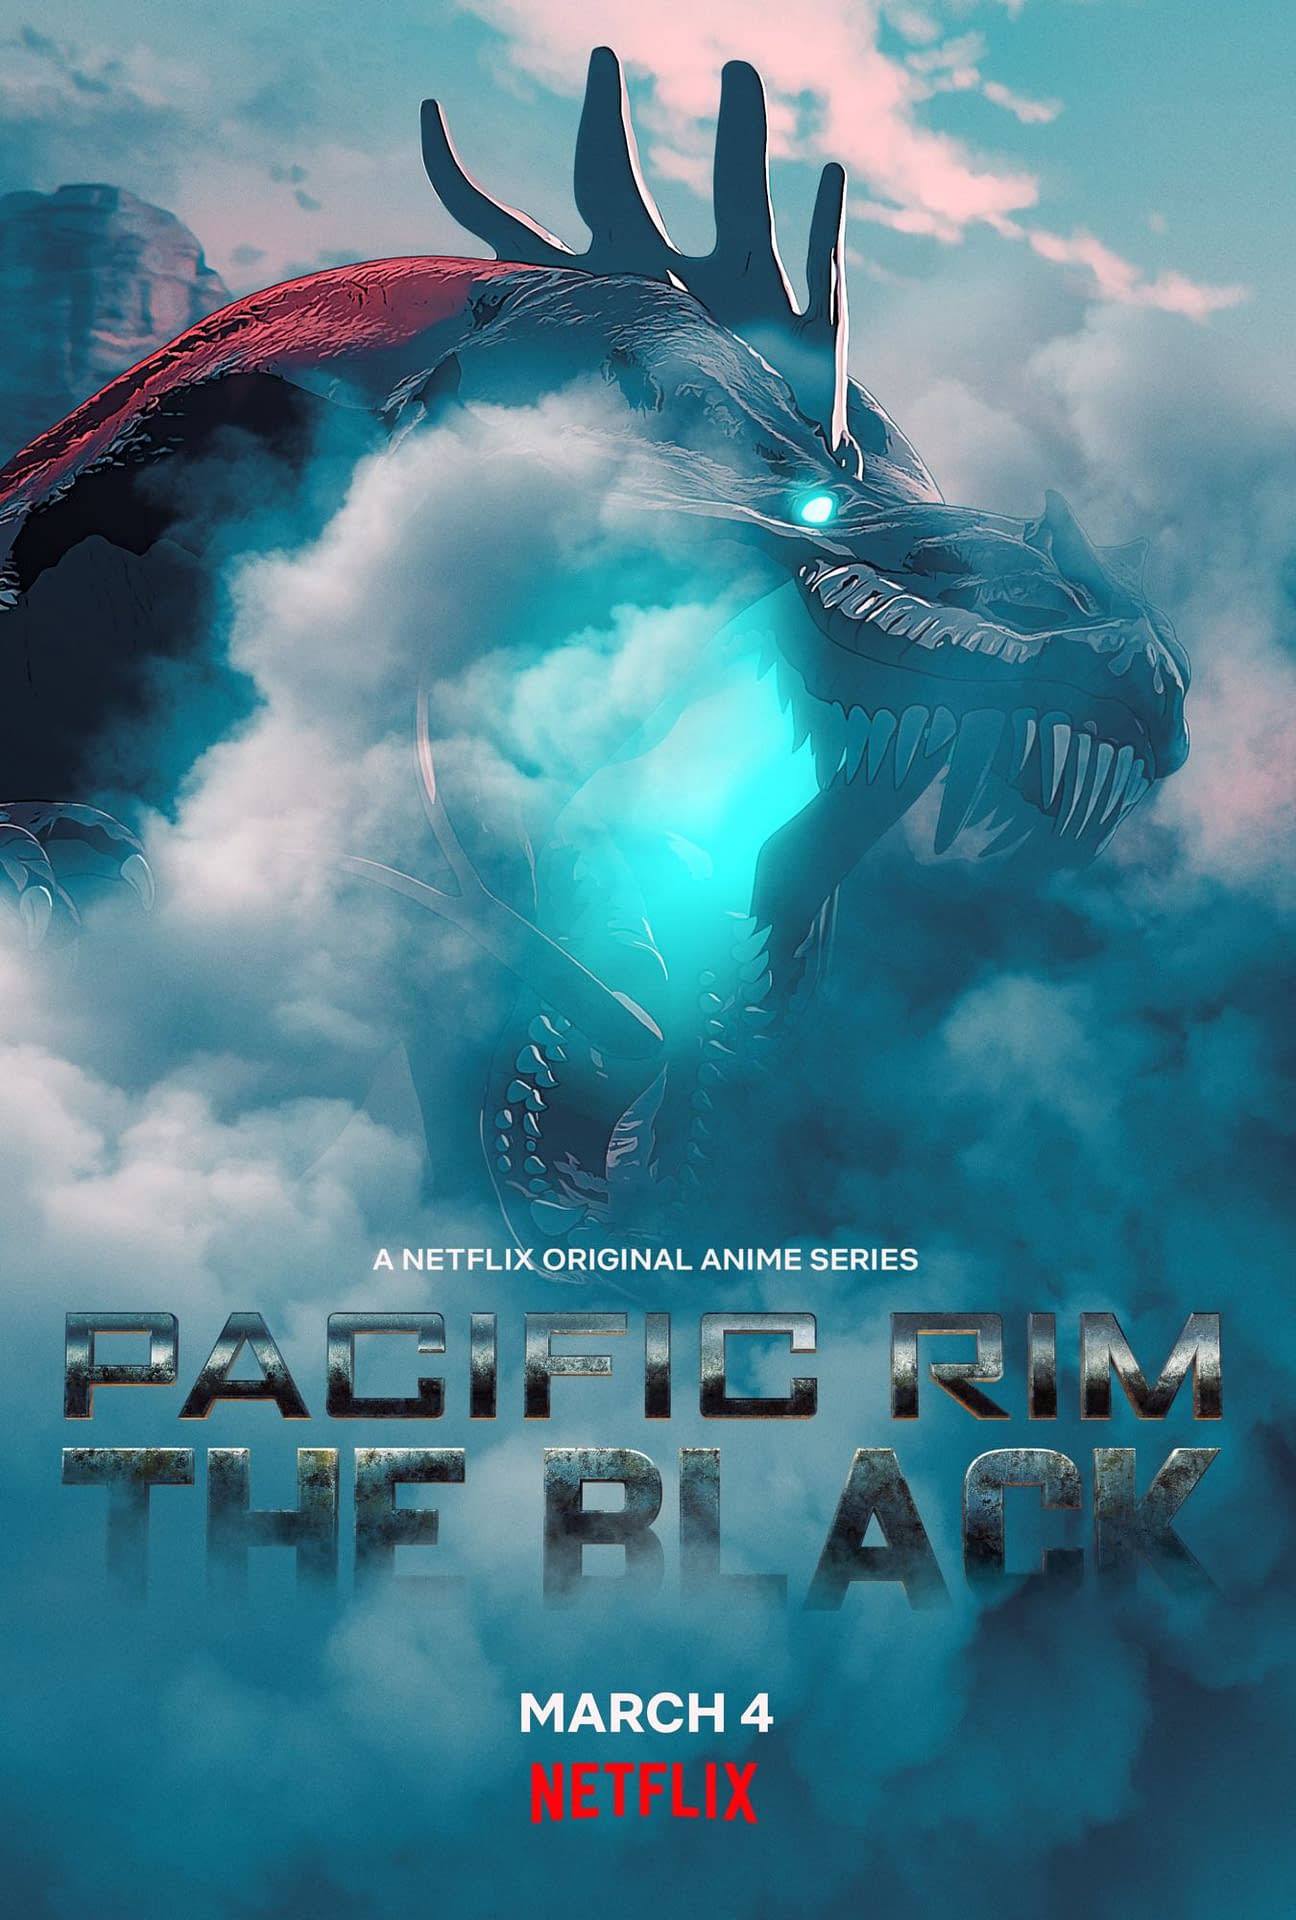 Pacific Rim The Black Netflix Anime Releases Jaeger Kaiju Posters